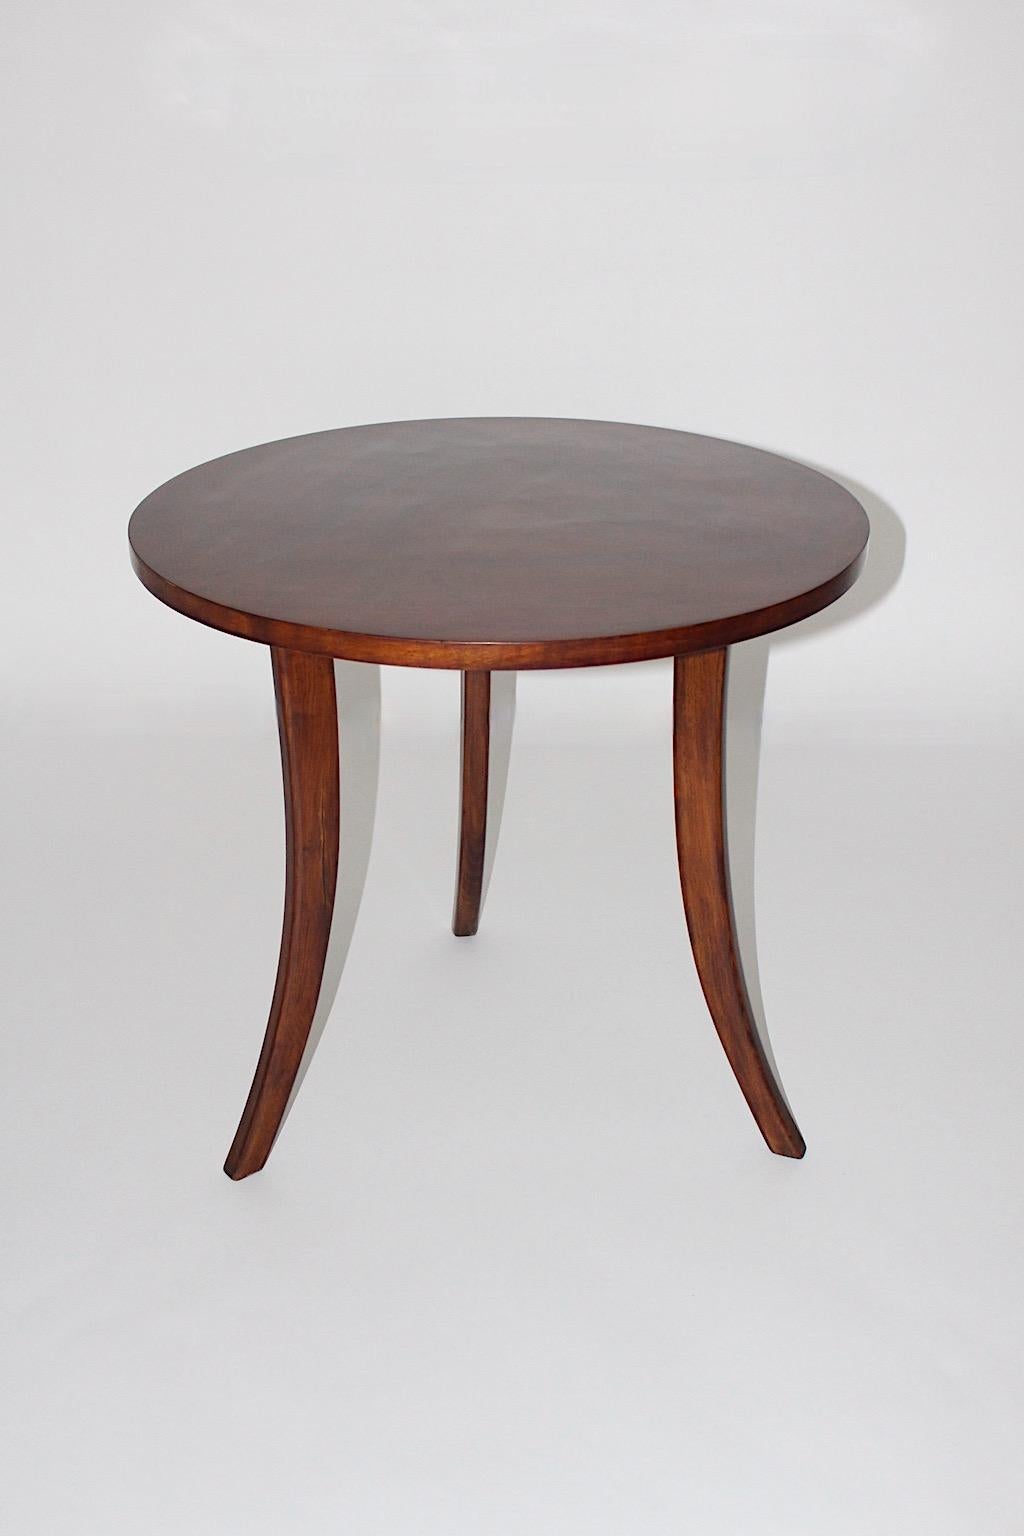 Austrian Art Deco Walnut Brown Vintage Coffee Table Side Table Josef Frank, 1930s, Vienna For Sale